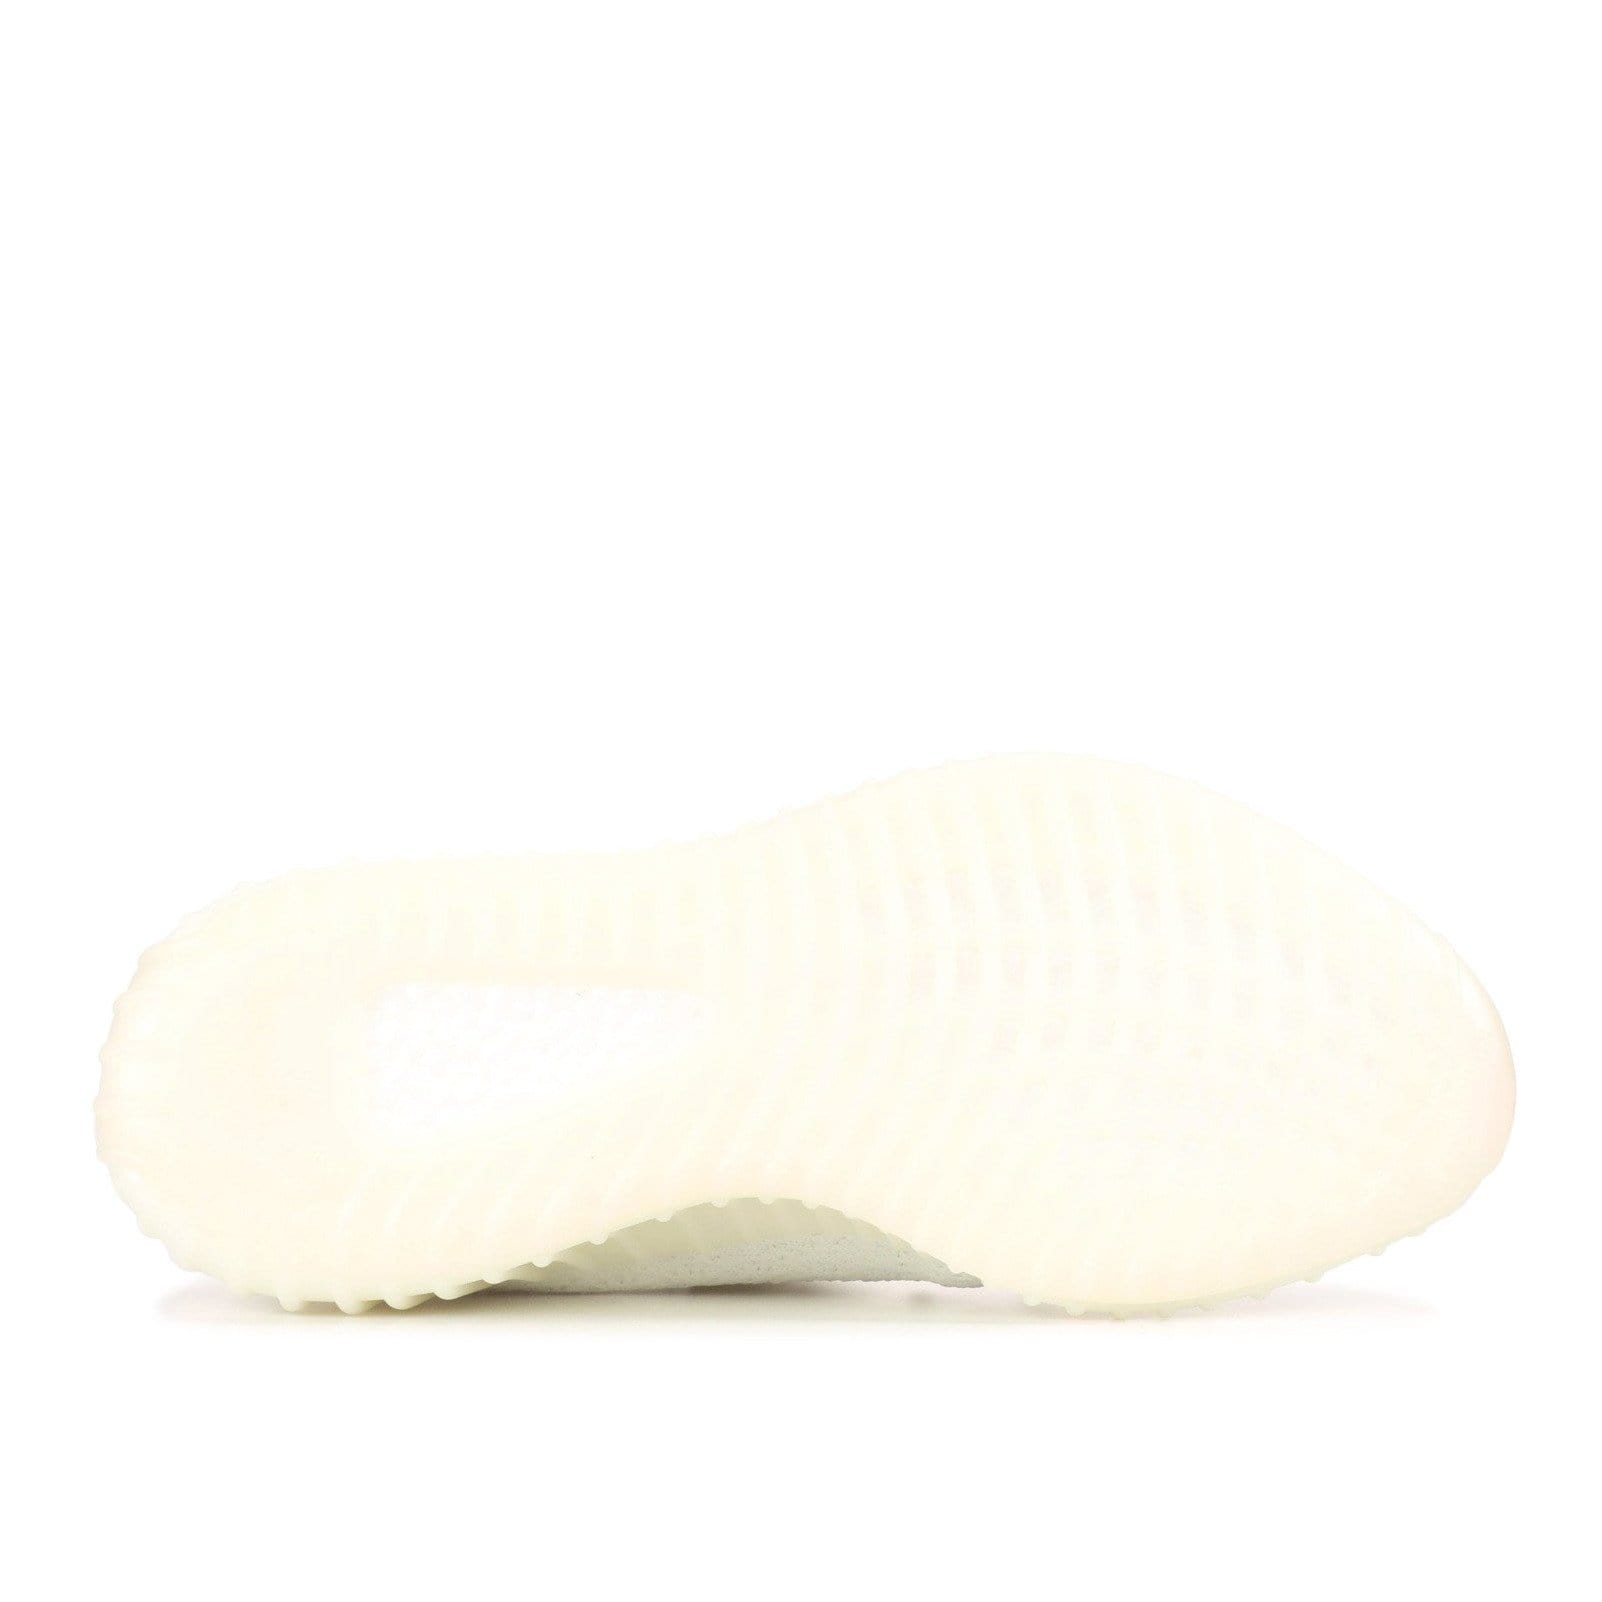 Buy Yeezy Boost 350 V2 'Cream White / Triple White' - CP9366